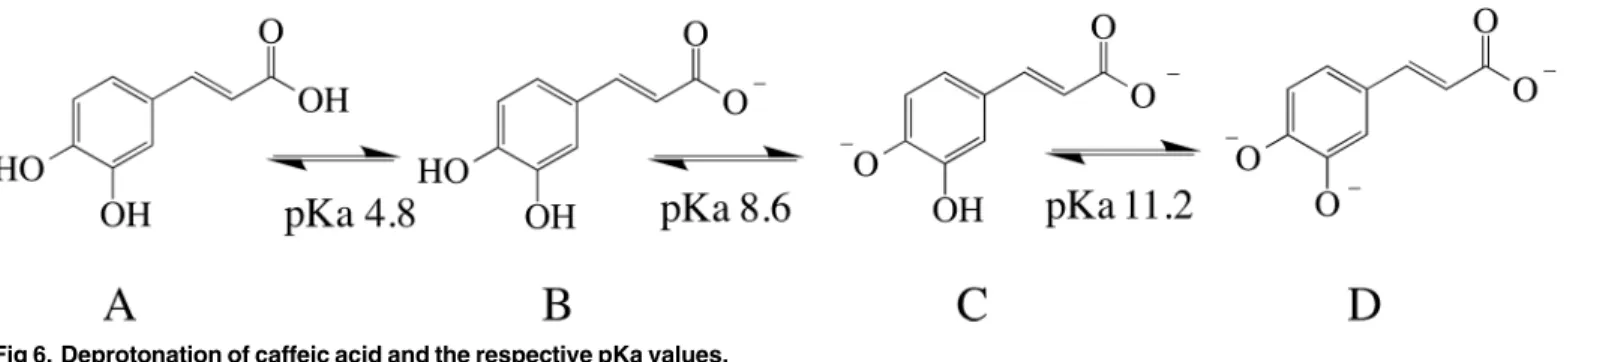 Fig 6. Deprotonation of caffeic acid and the respective pKa values.